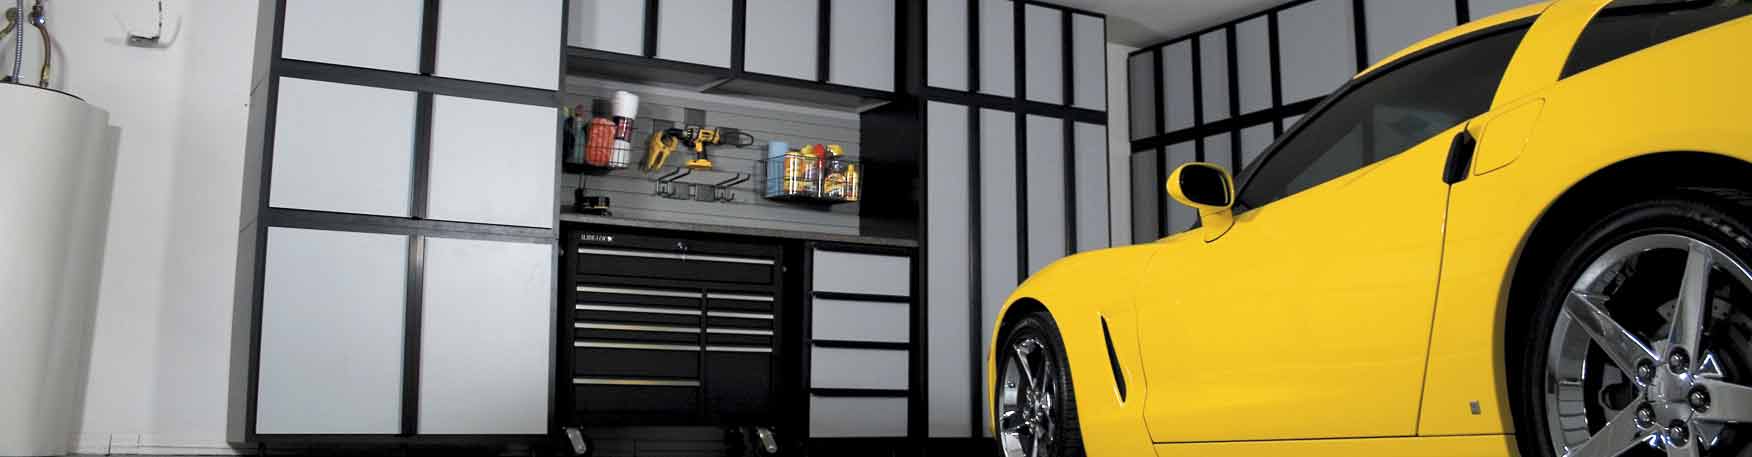 Tech Series DIY Garage Storage Cabinets and Yellow Corvette